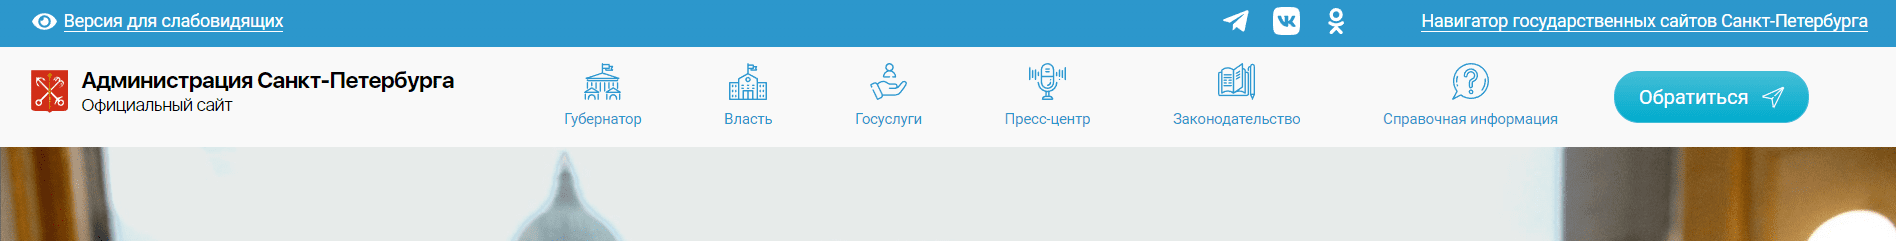 Администрация Санкт-Петербурга (gov.spb.ru)